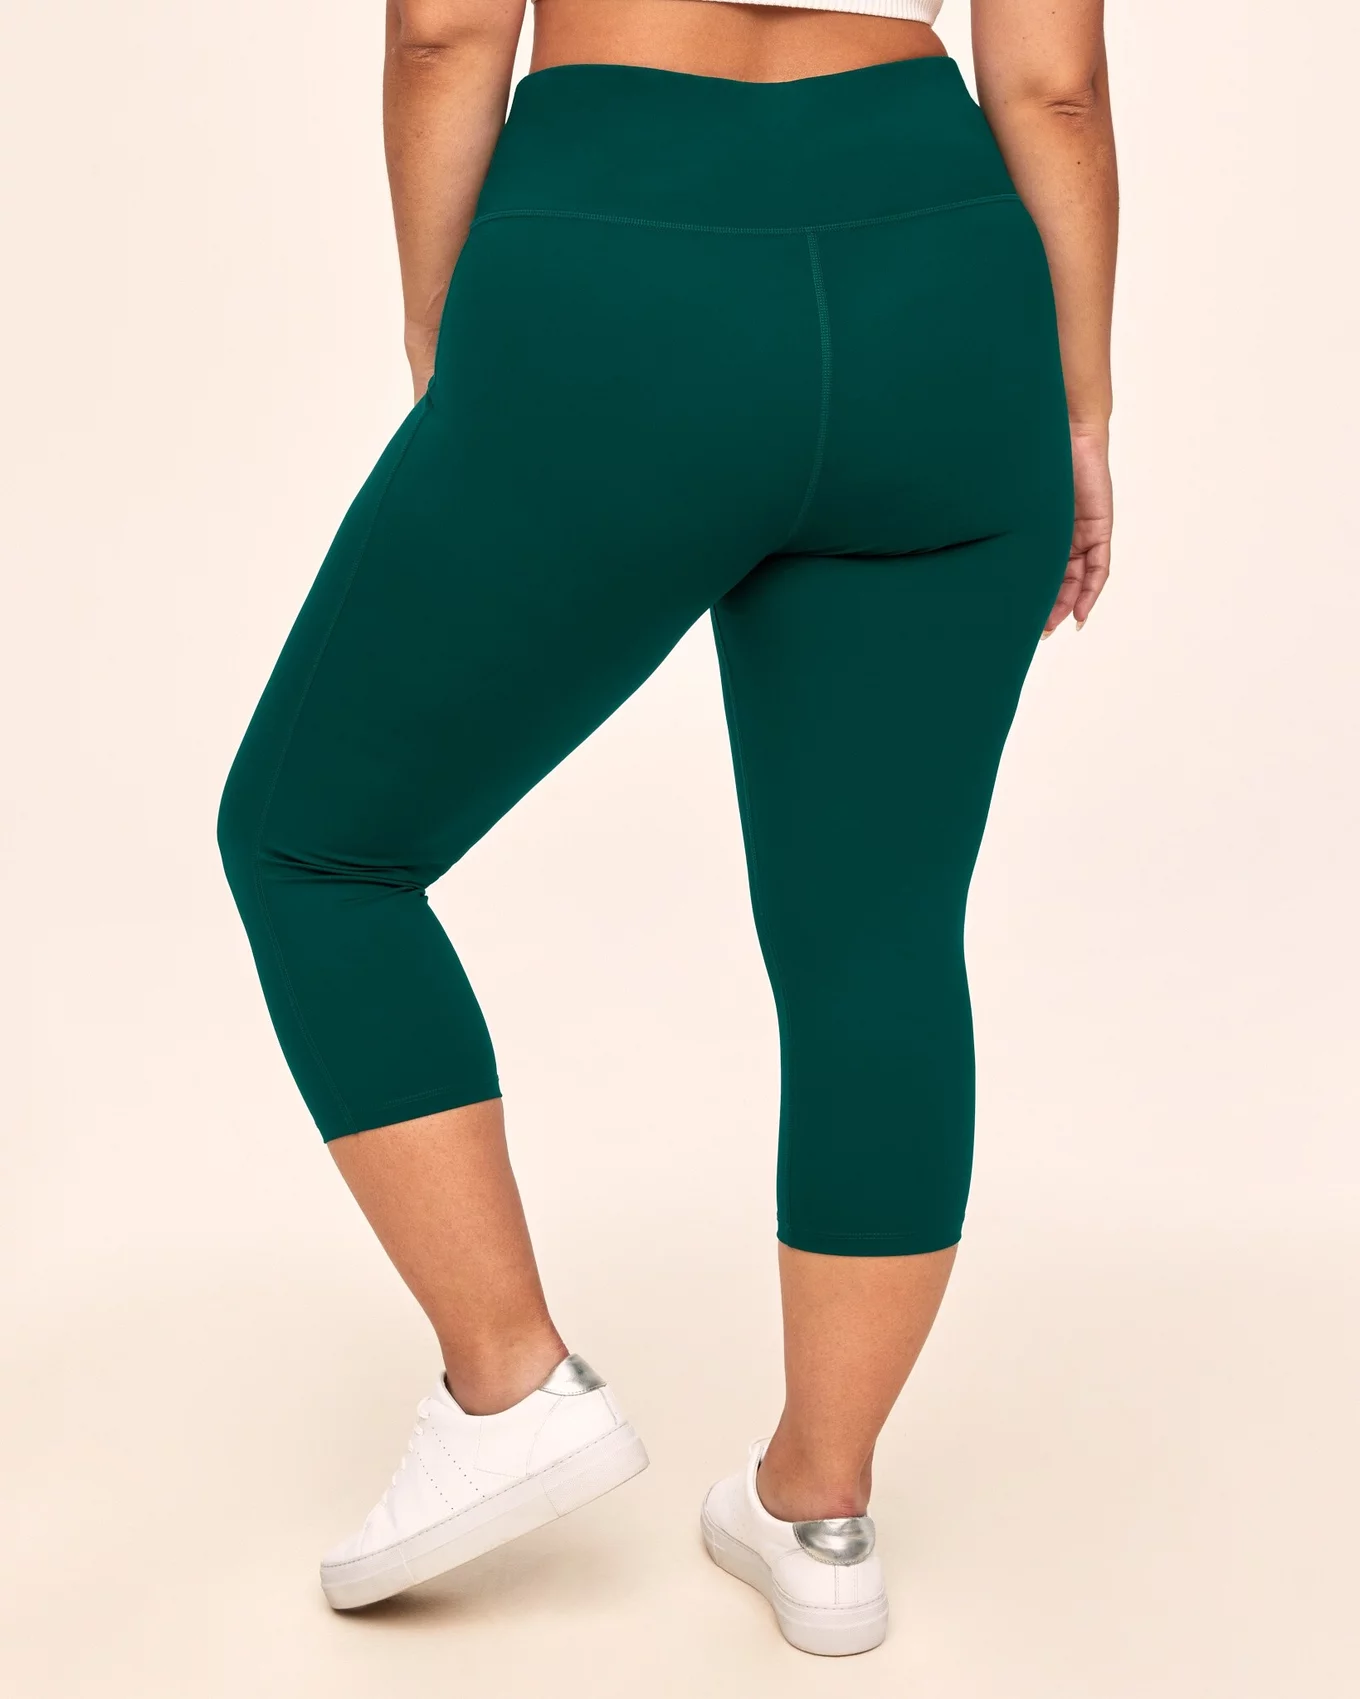 Plus Size - Emerald Green Full Length Premium Leggings - Torrid